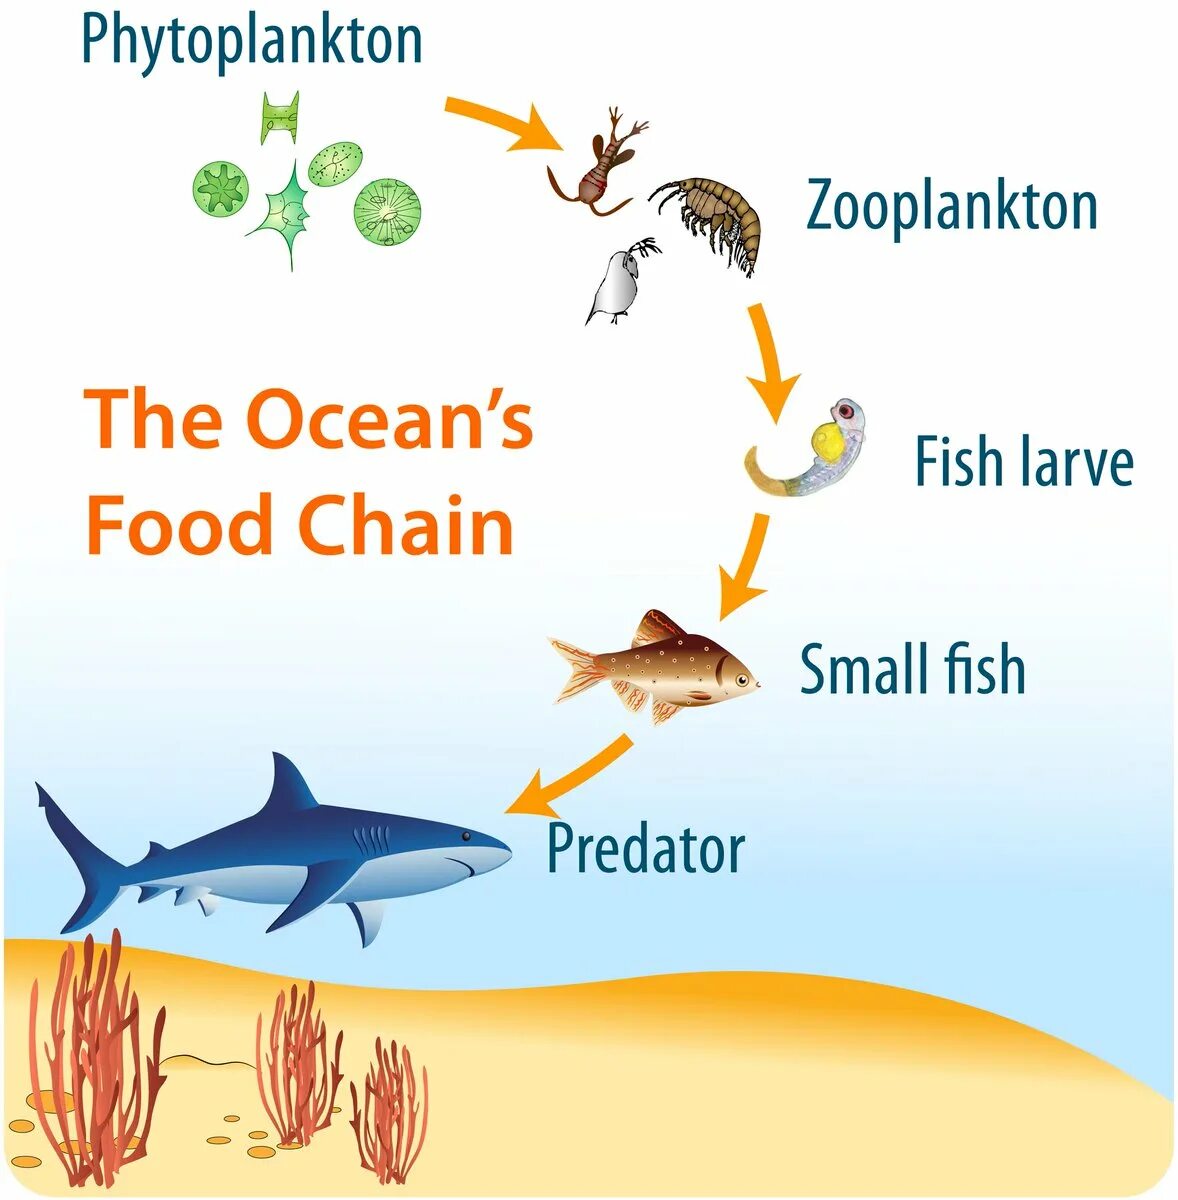 Food Chain океан. Food Chain in the Ocean. Фитопланктон пищевая цепь. Пищевая цепь океана.